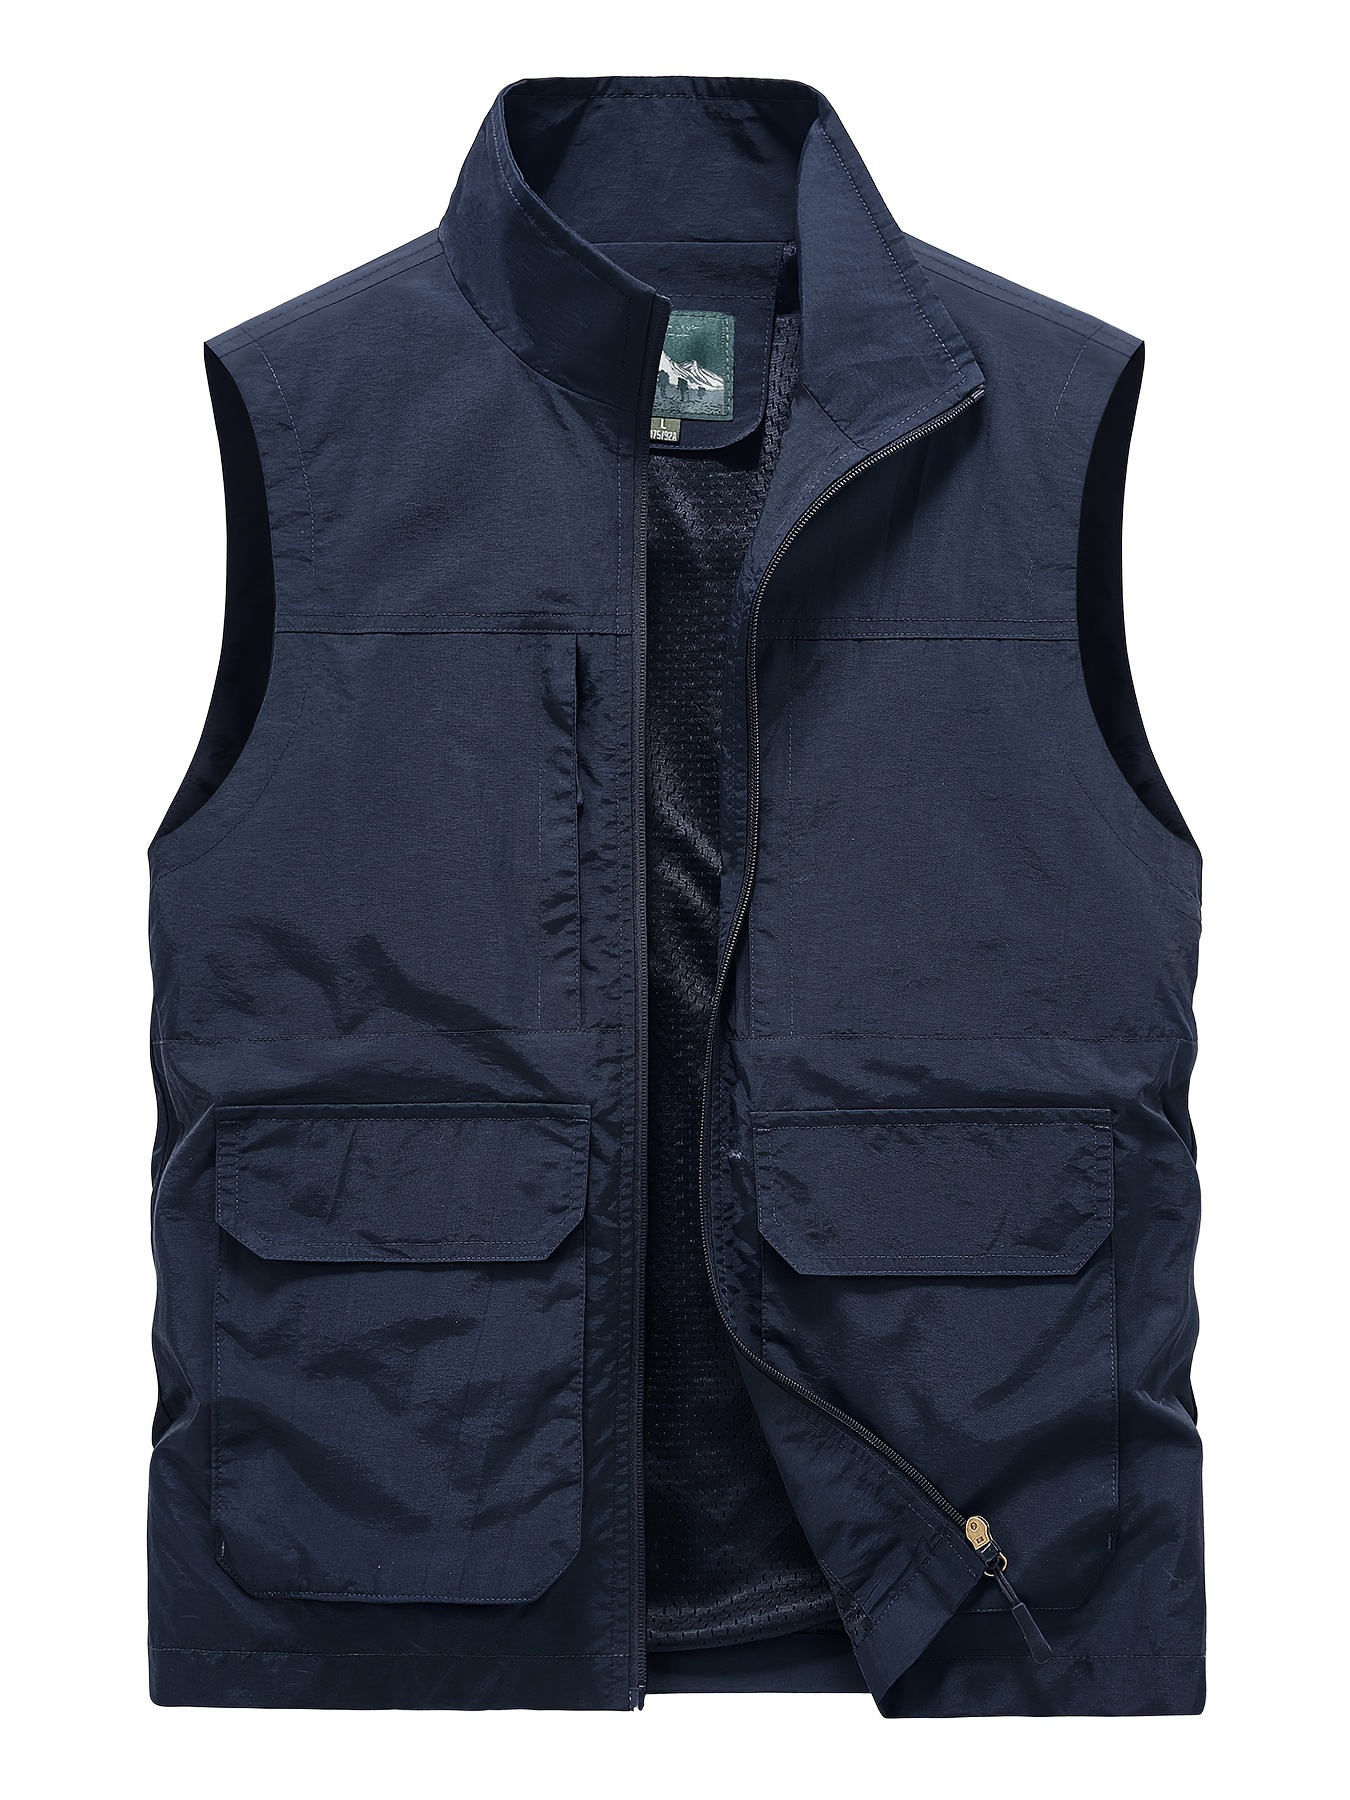 Lightweight Fishing Vest For Men Women Multi-Pockets Photography Travel  Hiking Waistcoat Jacket